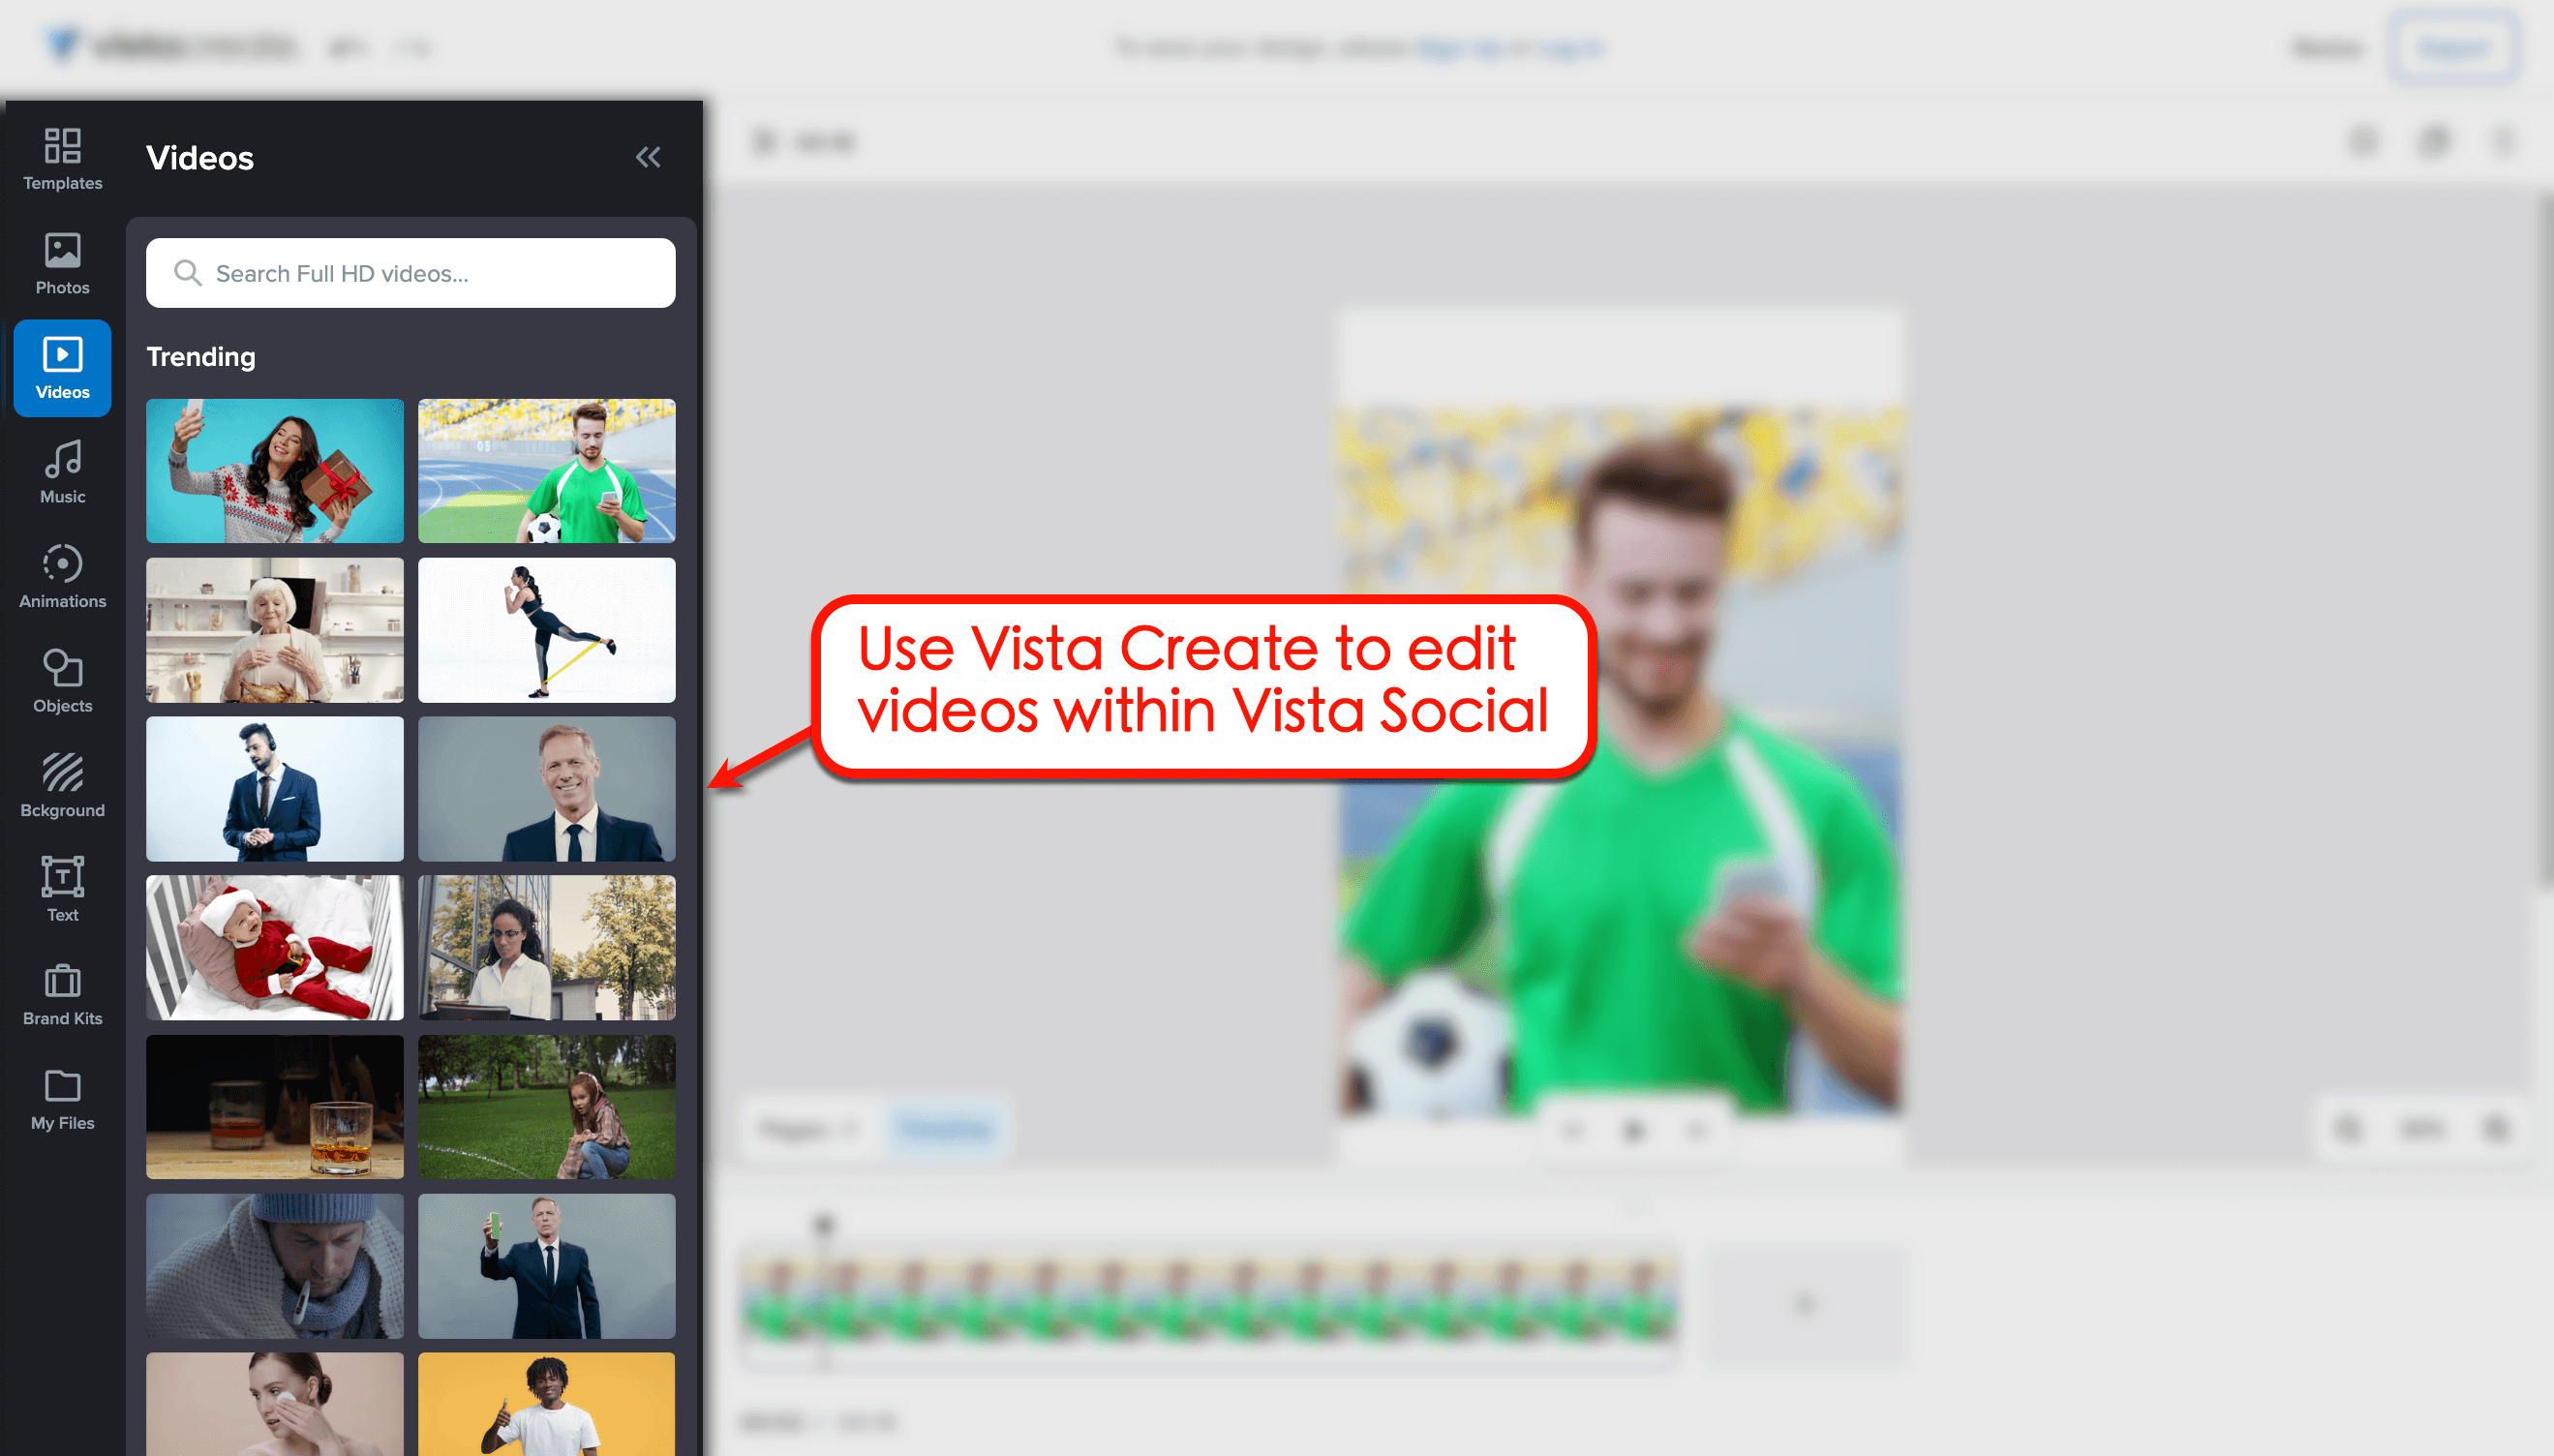 Use Vista Create to edit videos within Vista Social